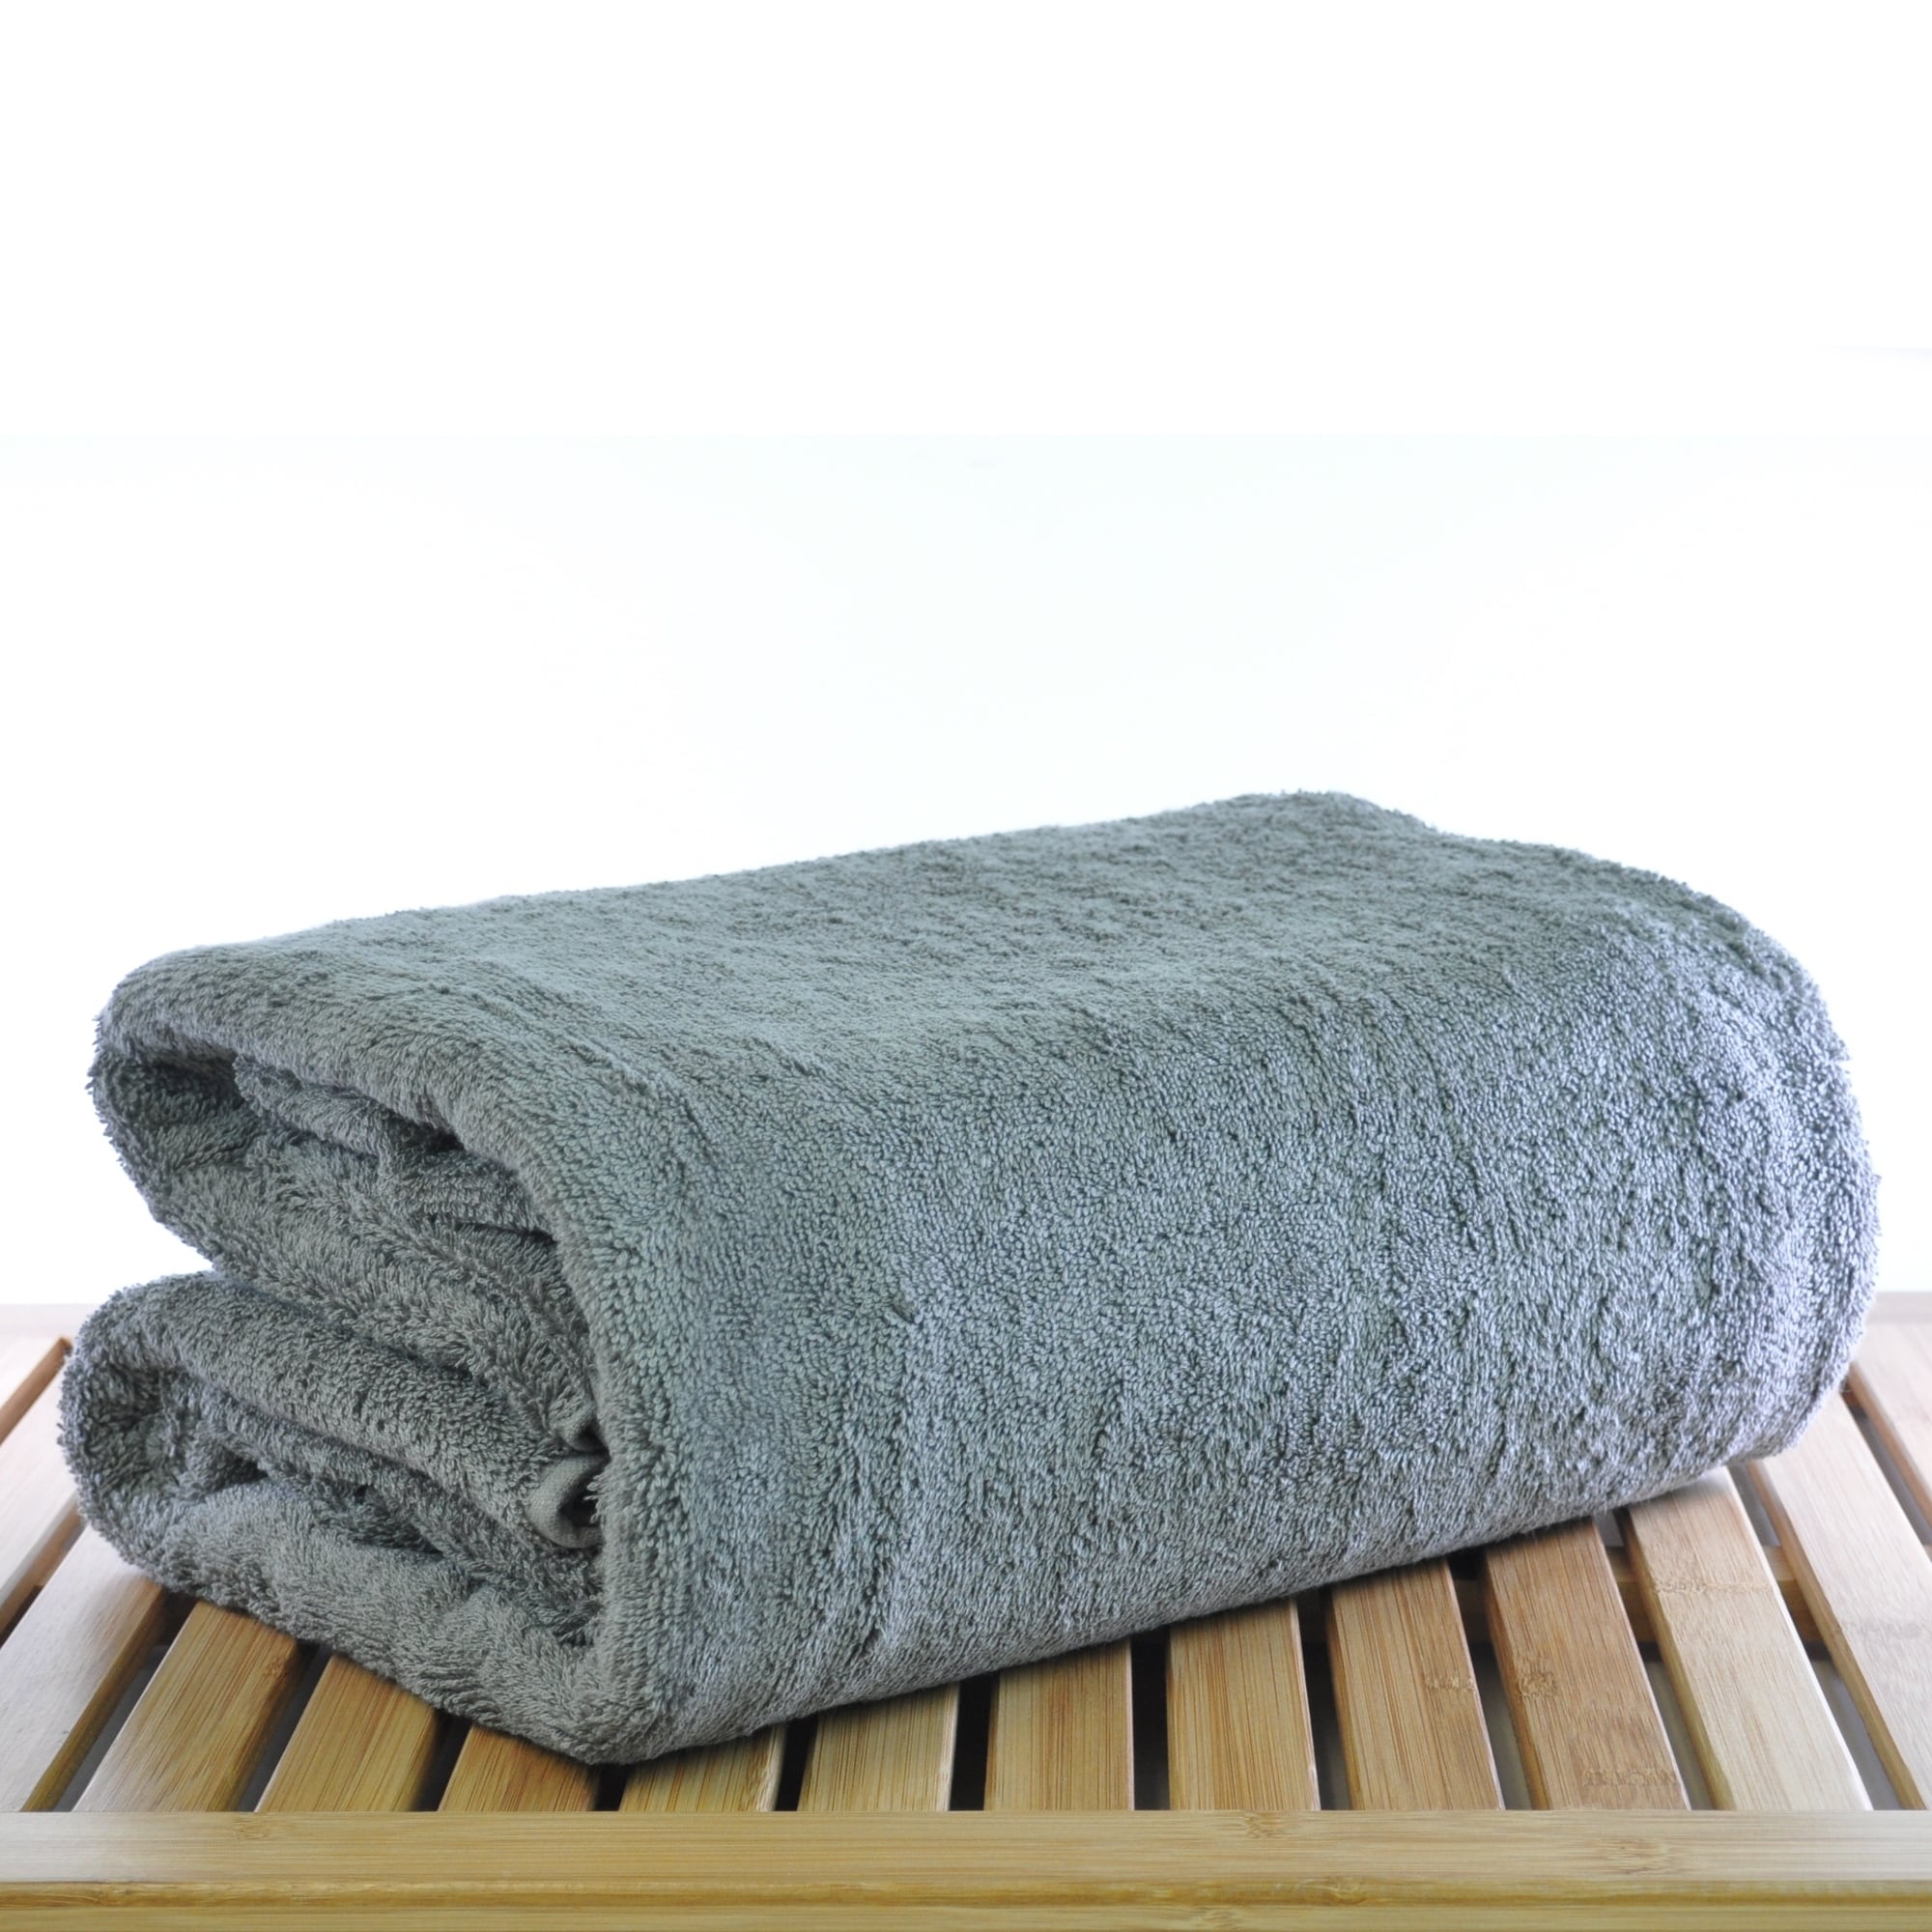 La Hammam - Bath Sheet Turkish Towels Genuine Cotton Oversized 40 x 80